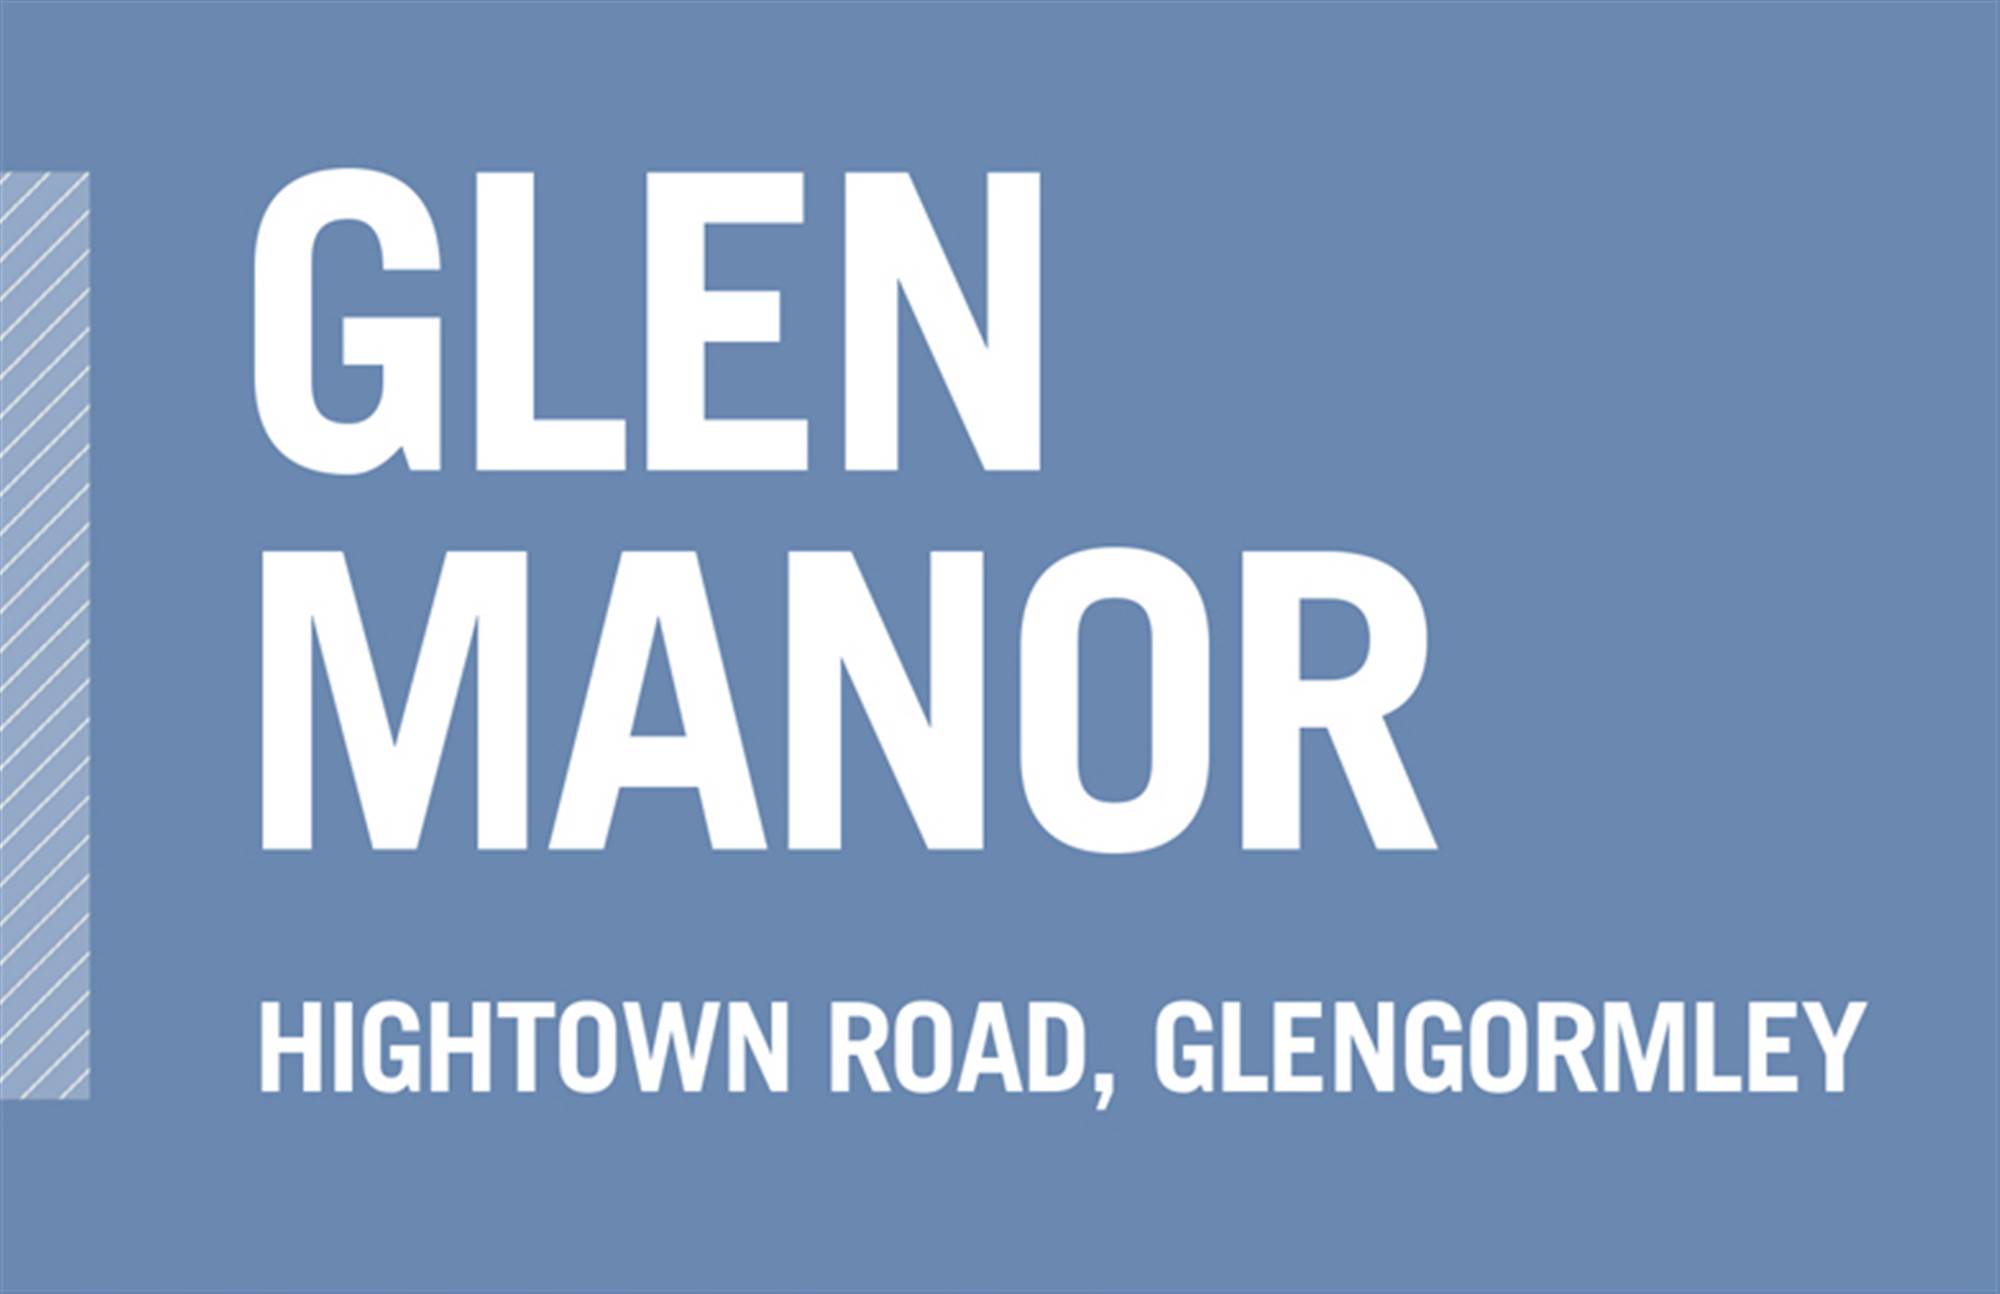 Glen Manor, Hightown Road, Glengormley